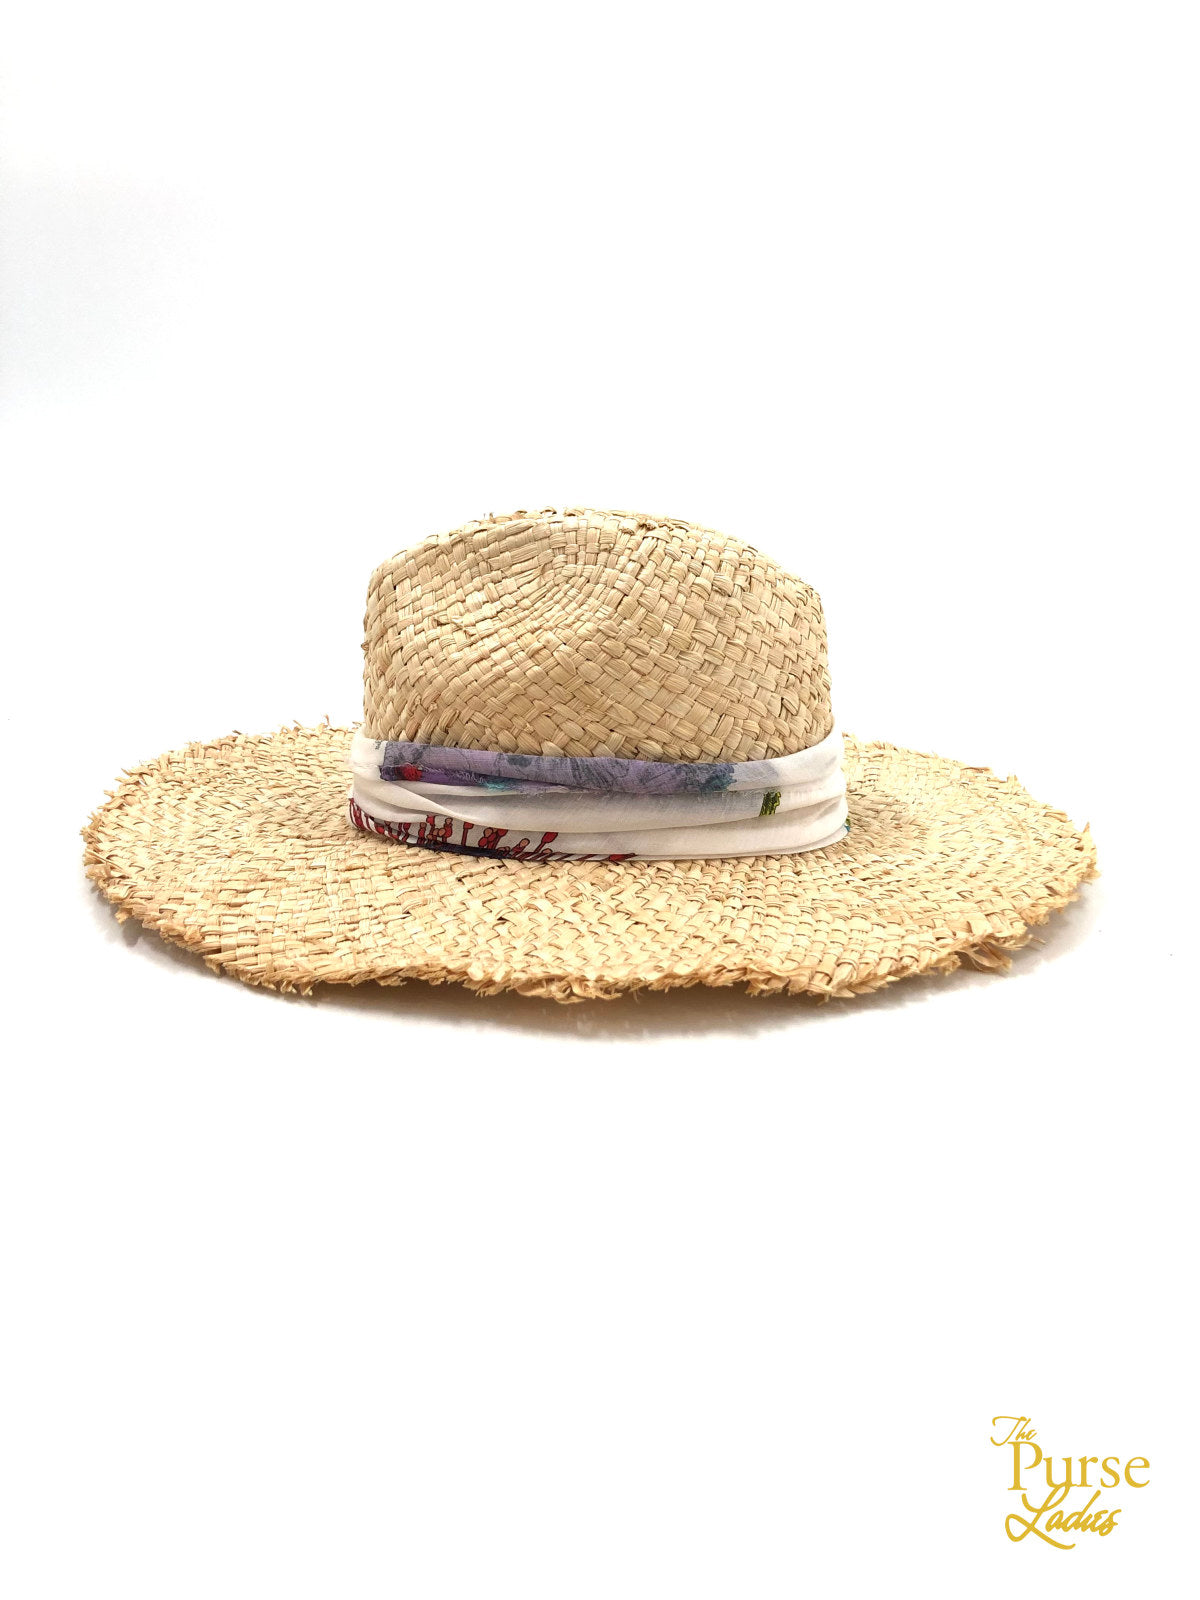 EMILLIO PUCCI Beige Straw Hat w/ Floral Print Band/Scarf